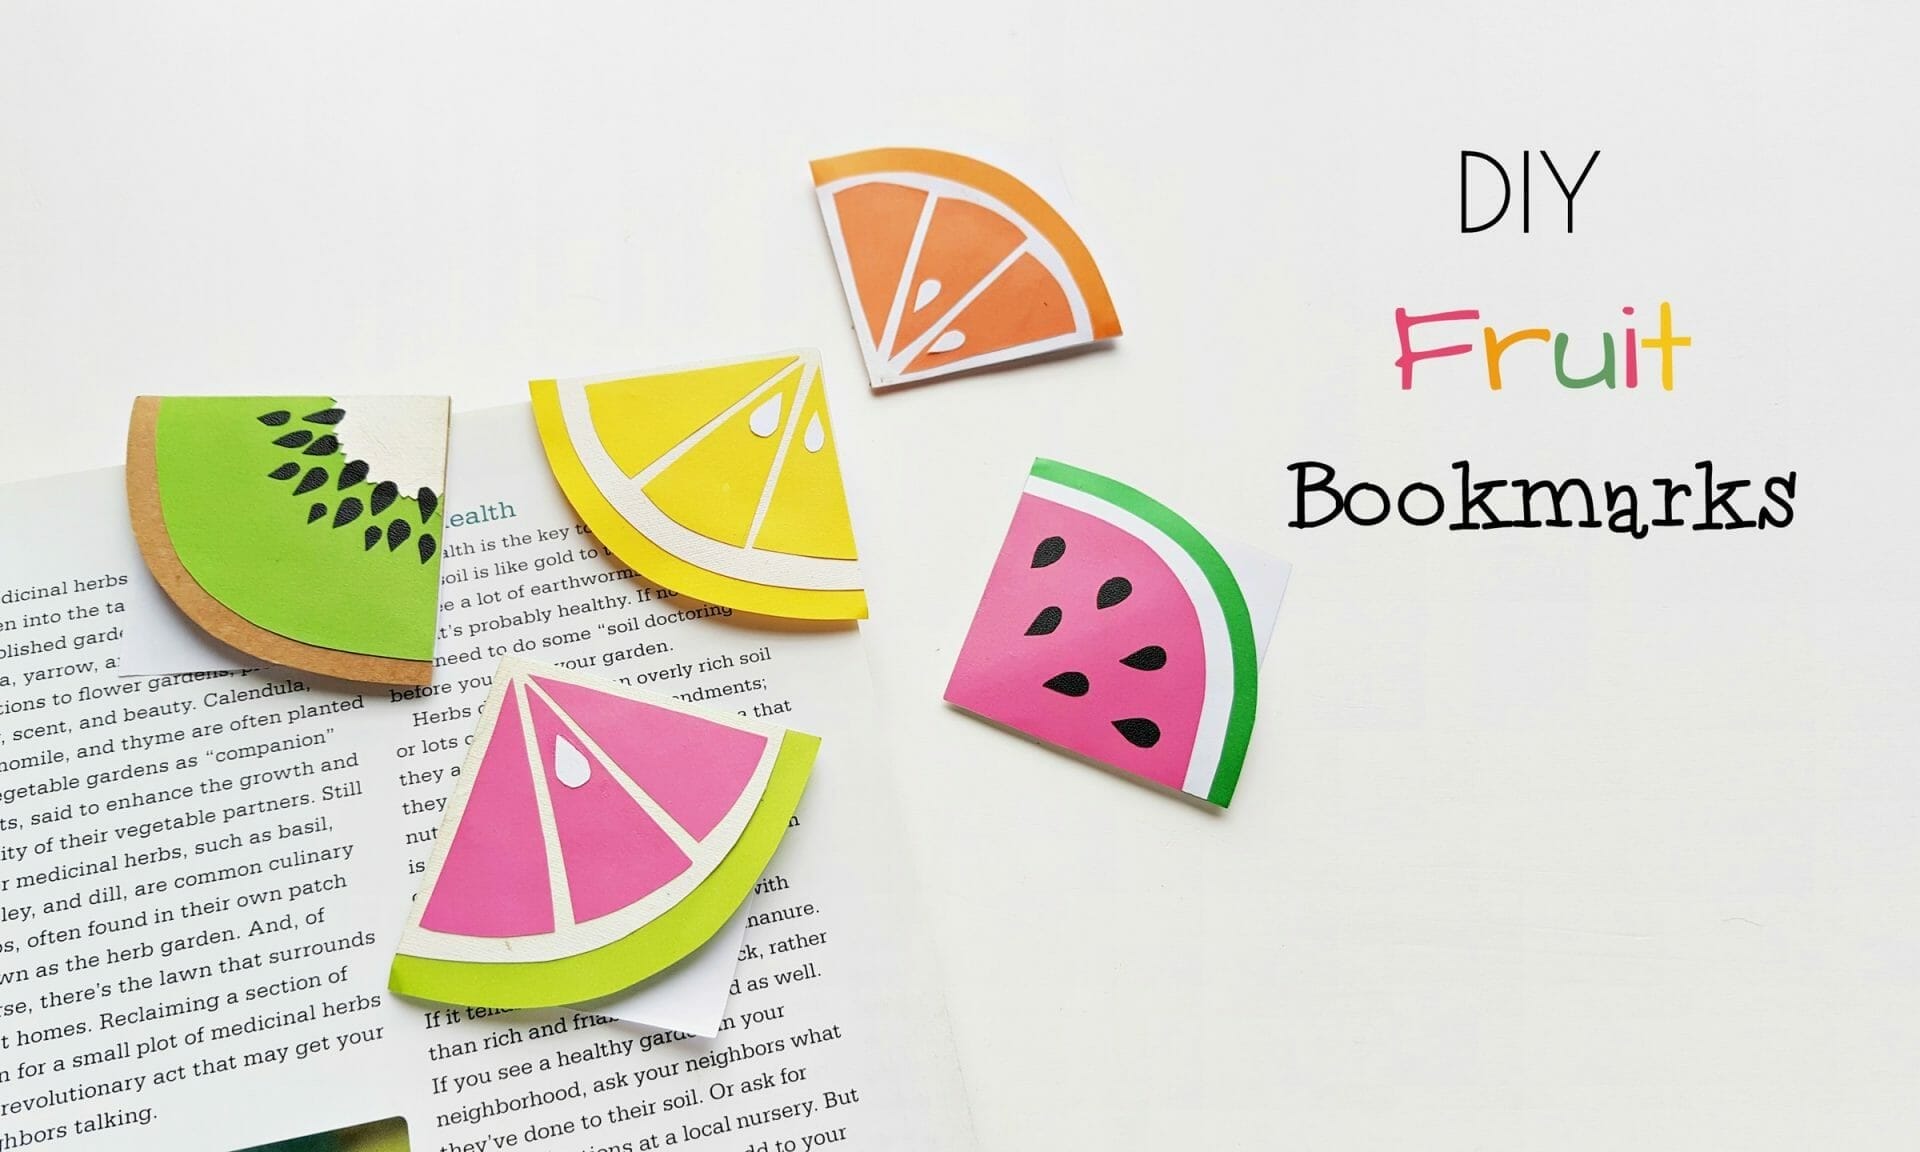 DIY fruit bookmarks